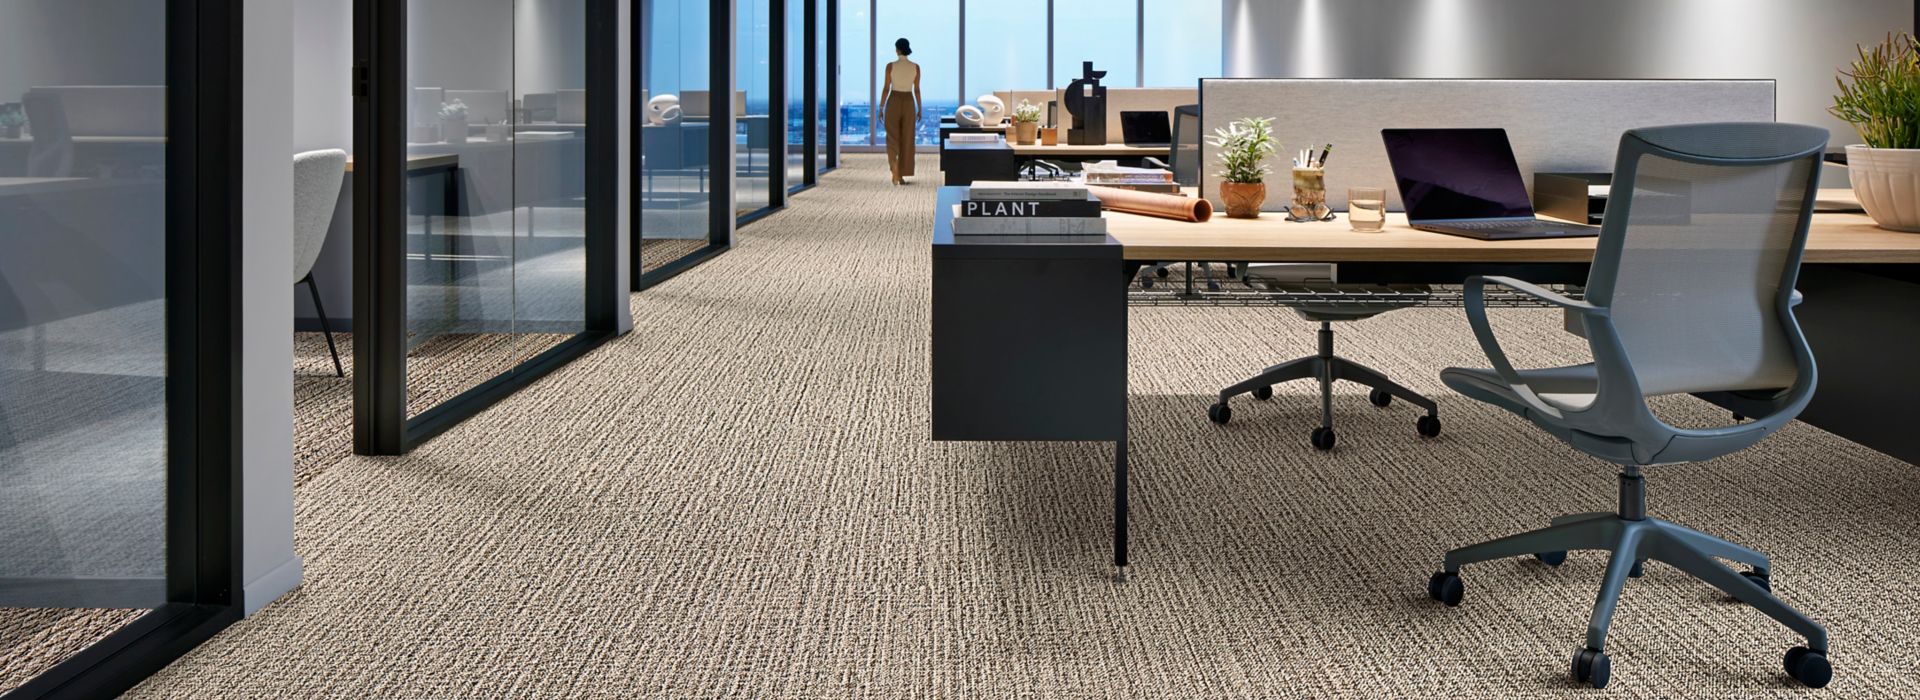 Interface E614 and E616 plank carpet tile in open plan office